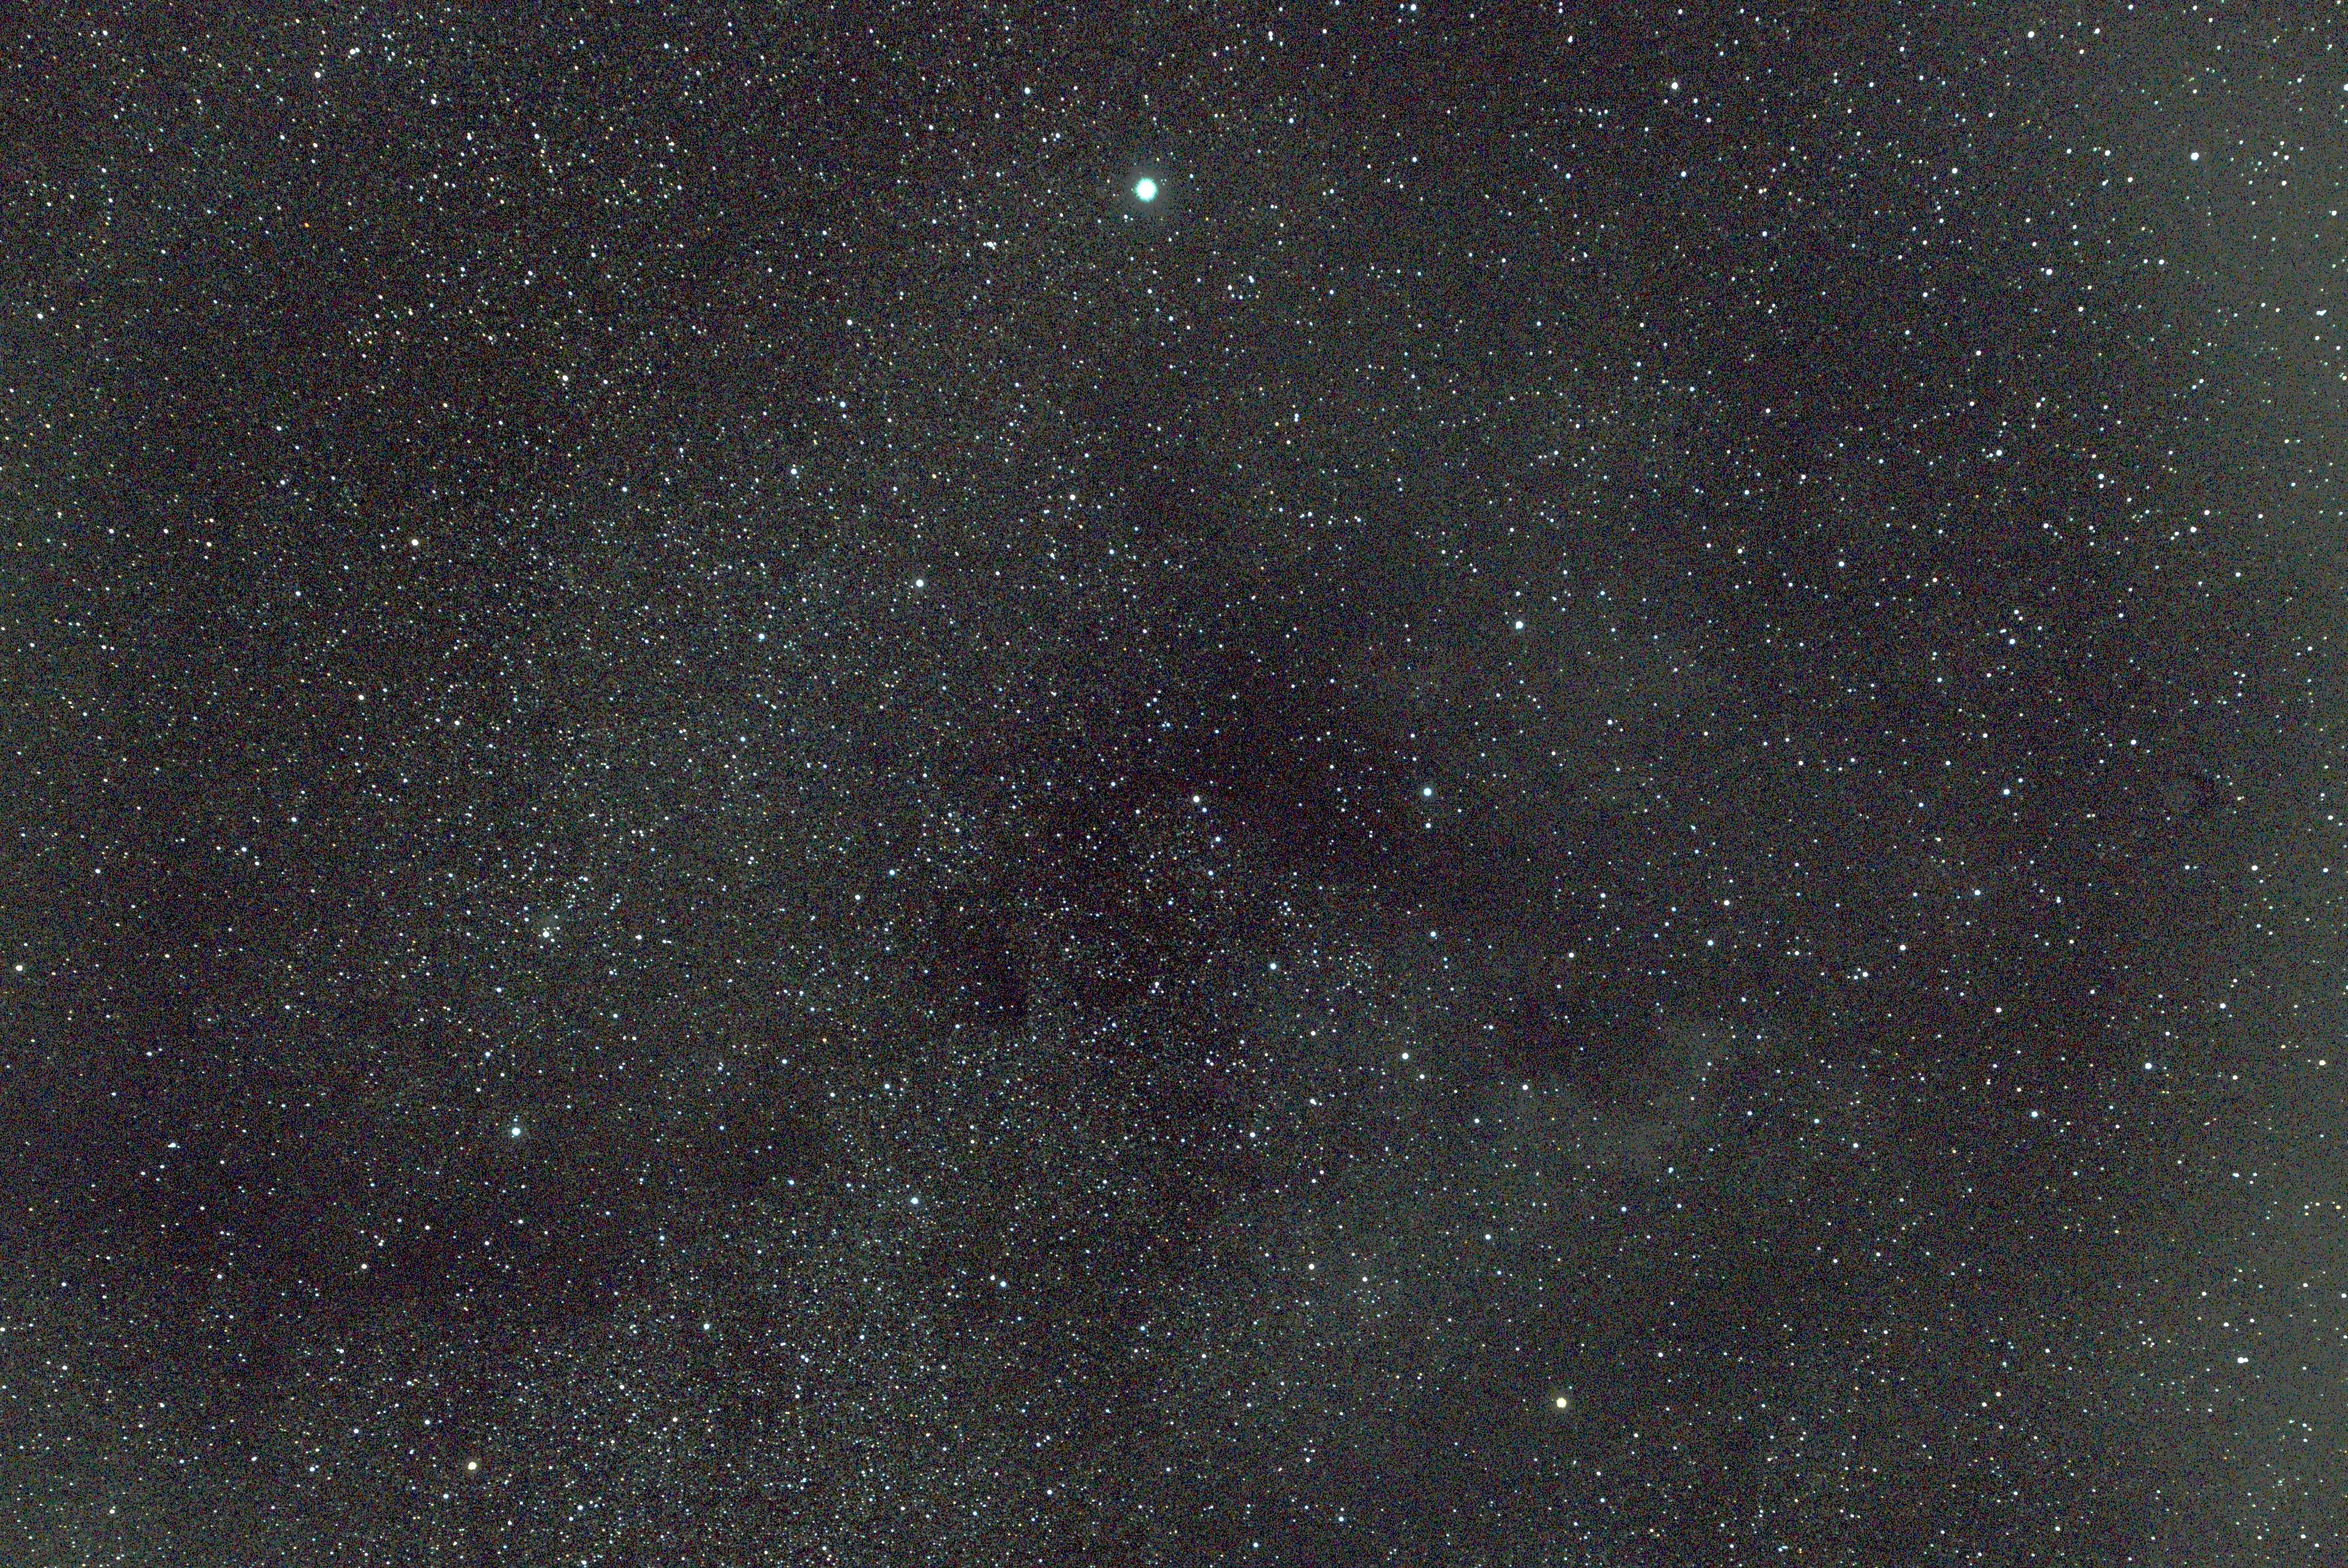 /img/astrophoto/CC_BY_SA_aurelien_genin/20230624_NGC7000 (600mm + R6).jpg